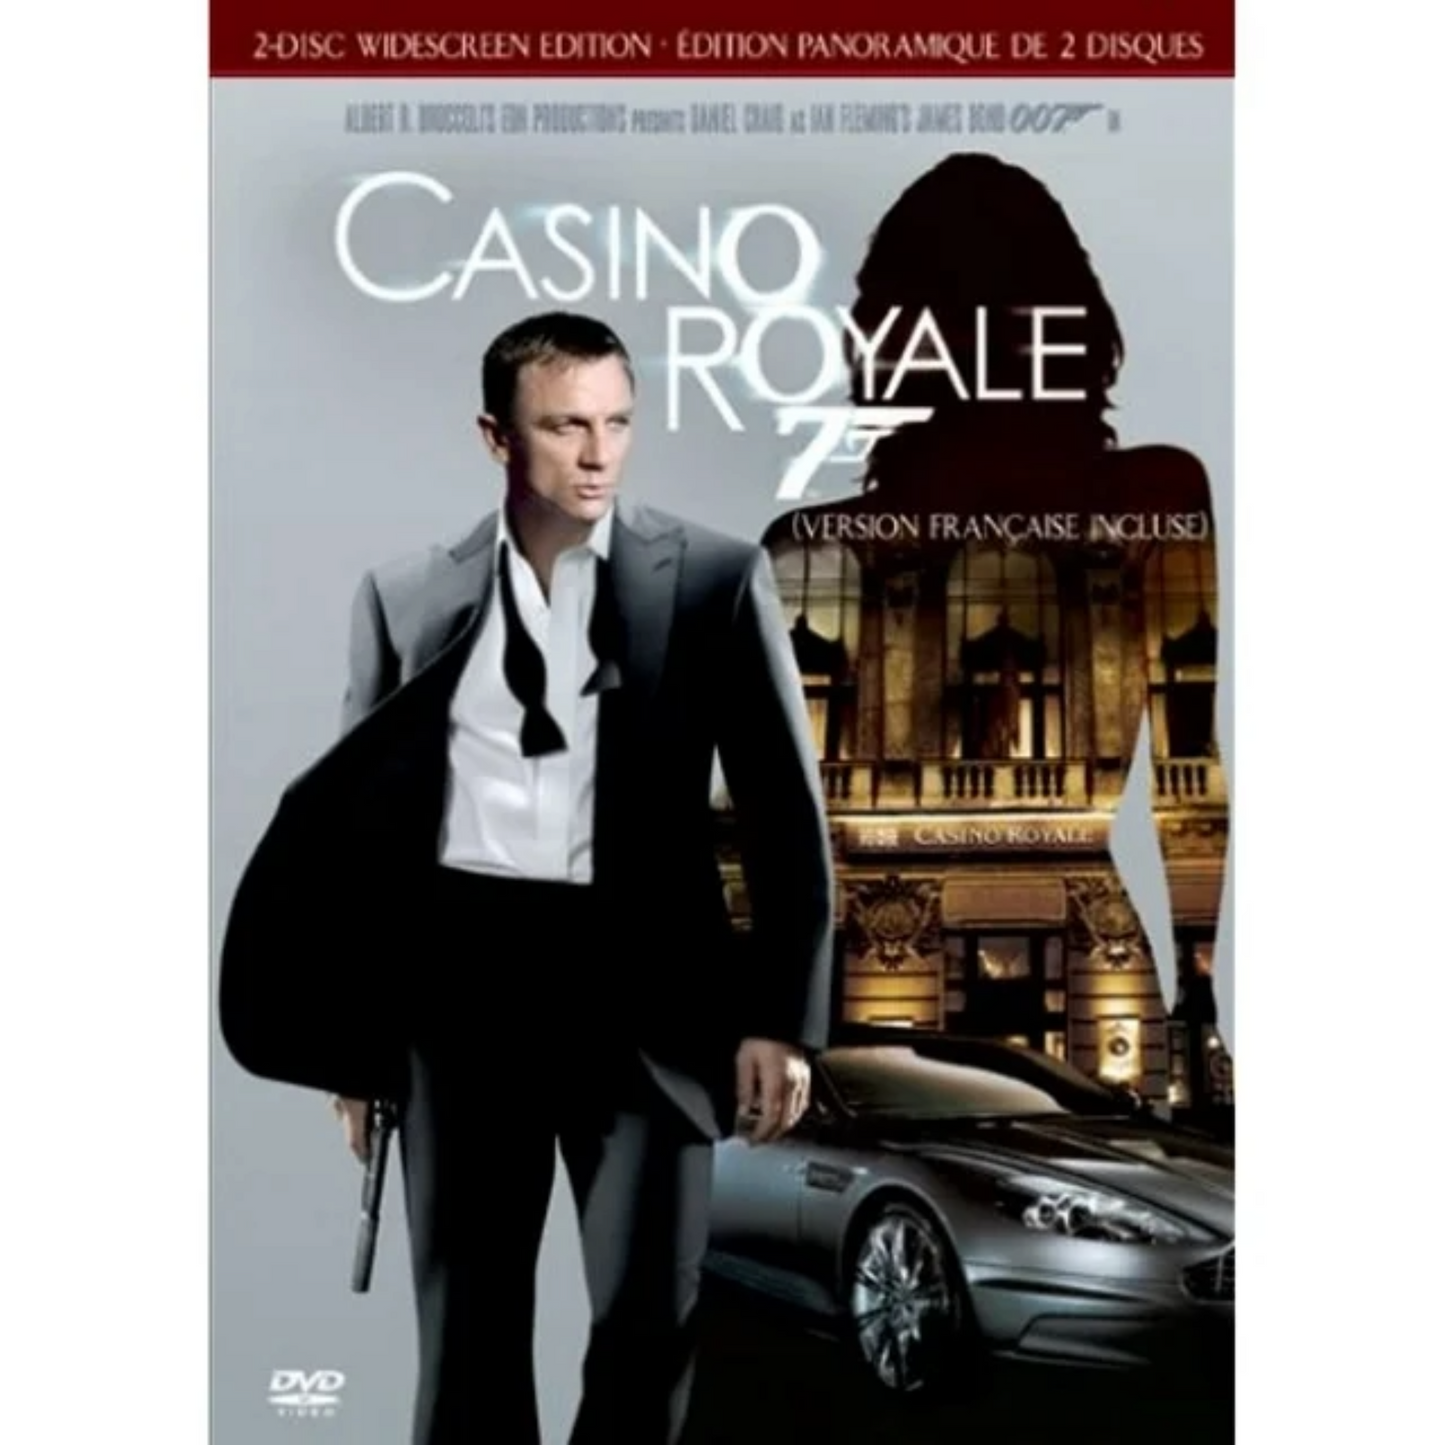 James Bond Casino Royale 007 DVD 2-Disc Widescreen Edition (Sealed)